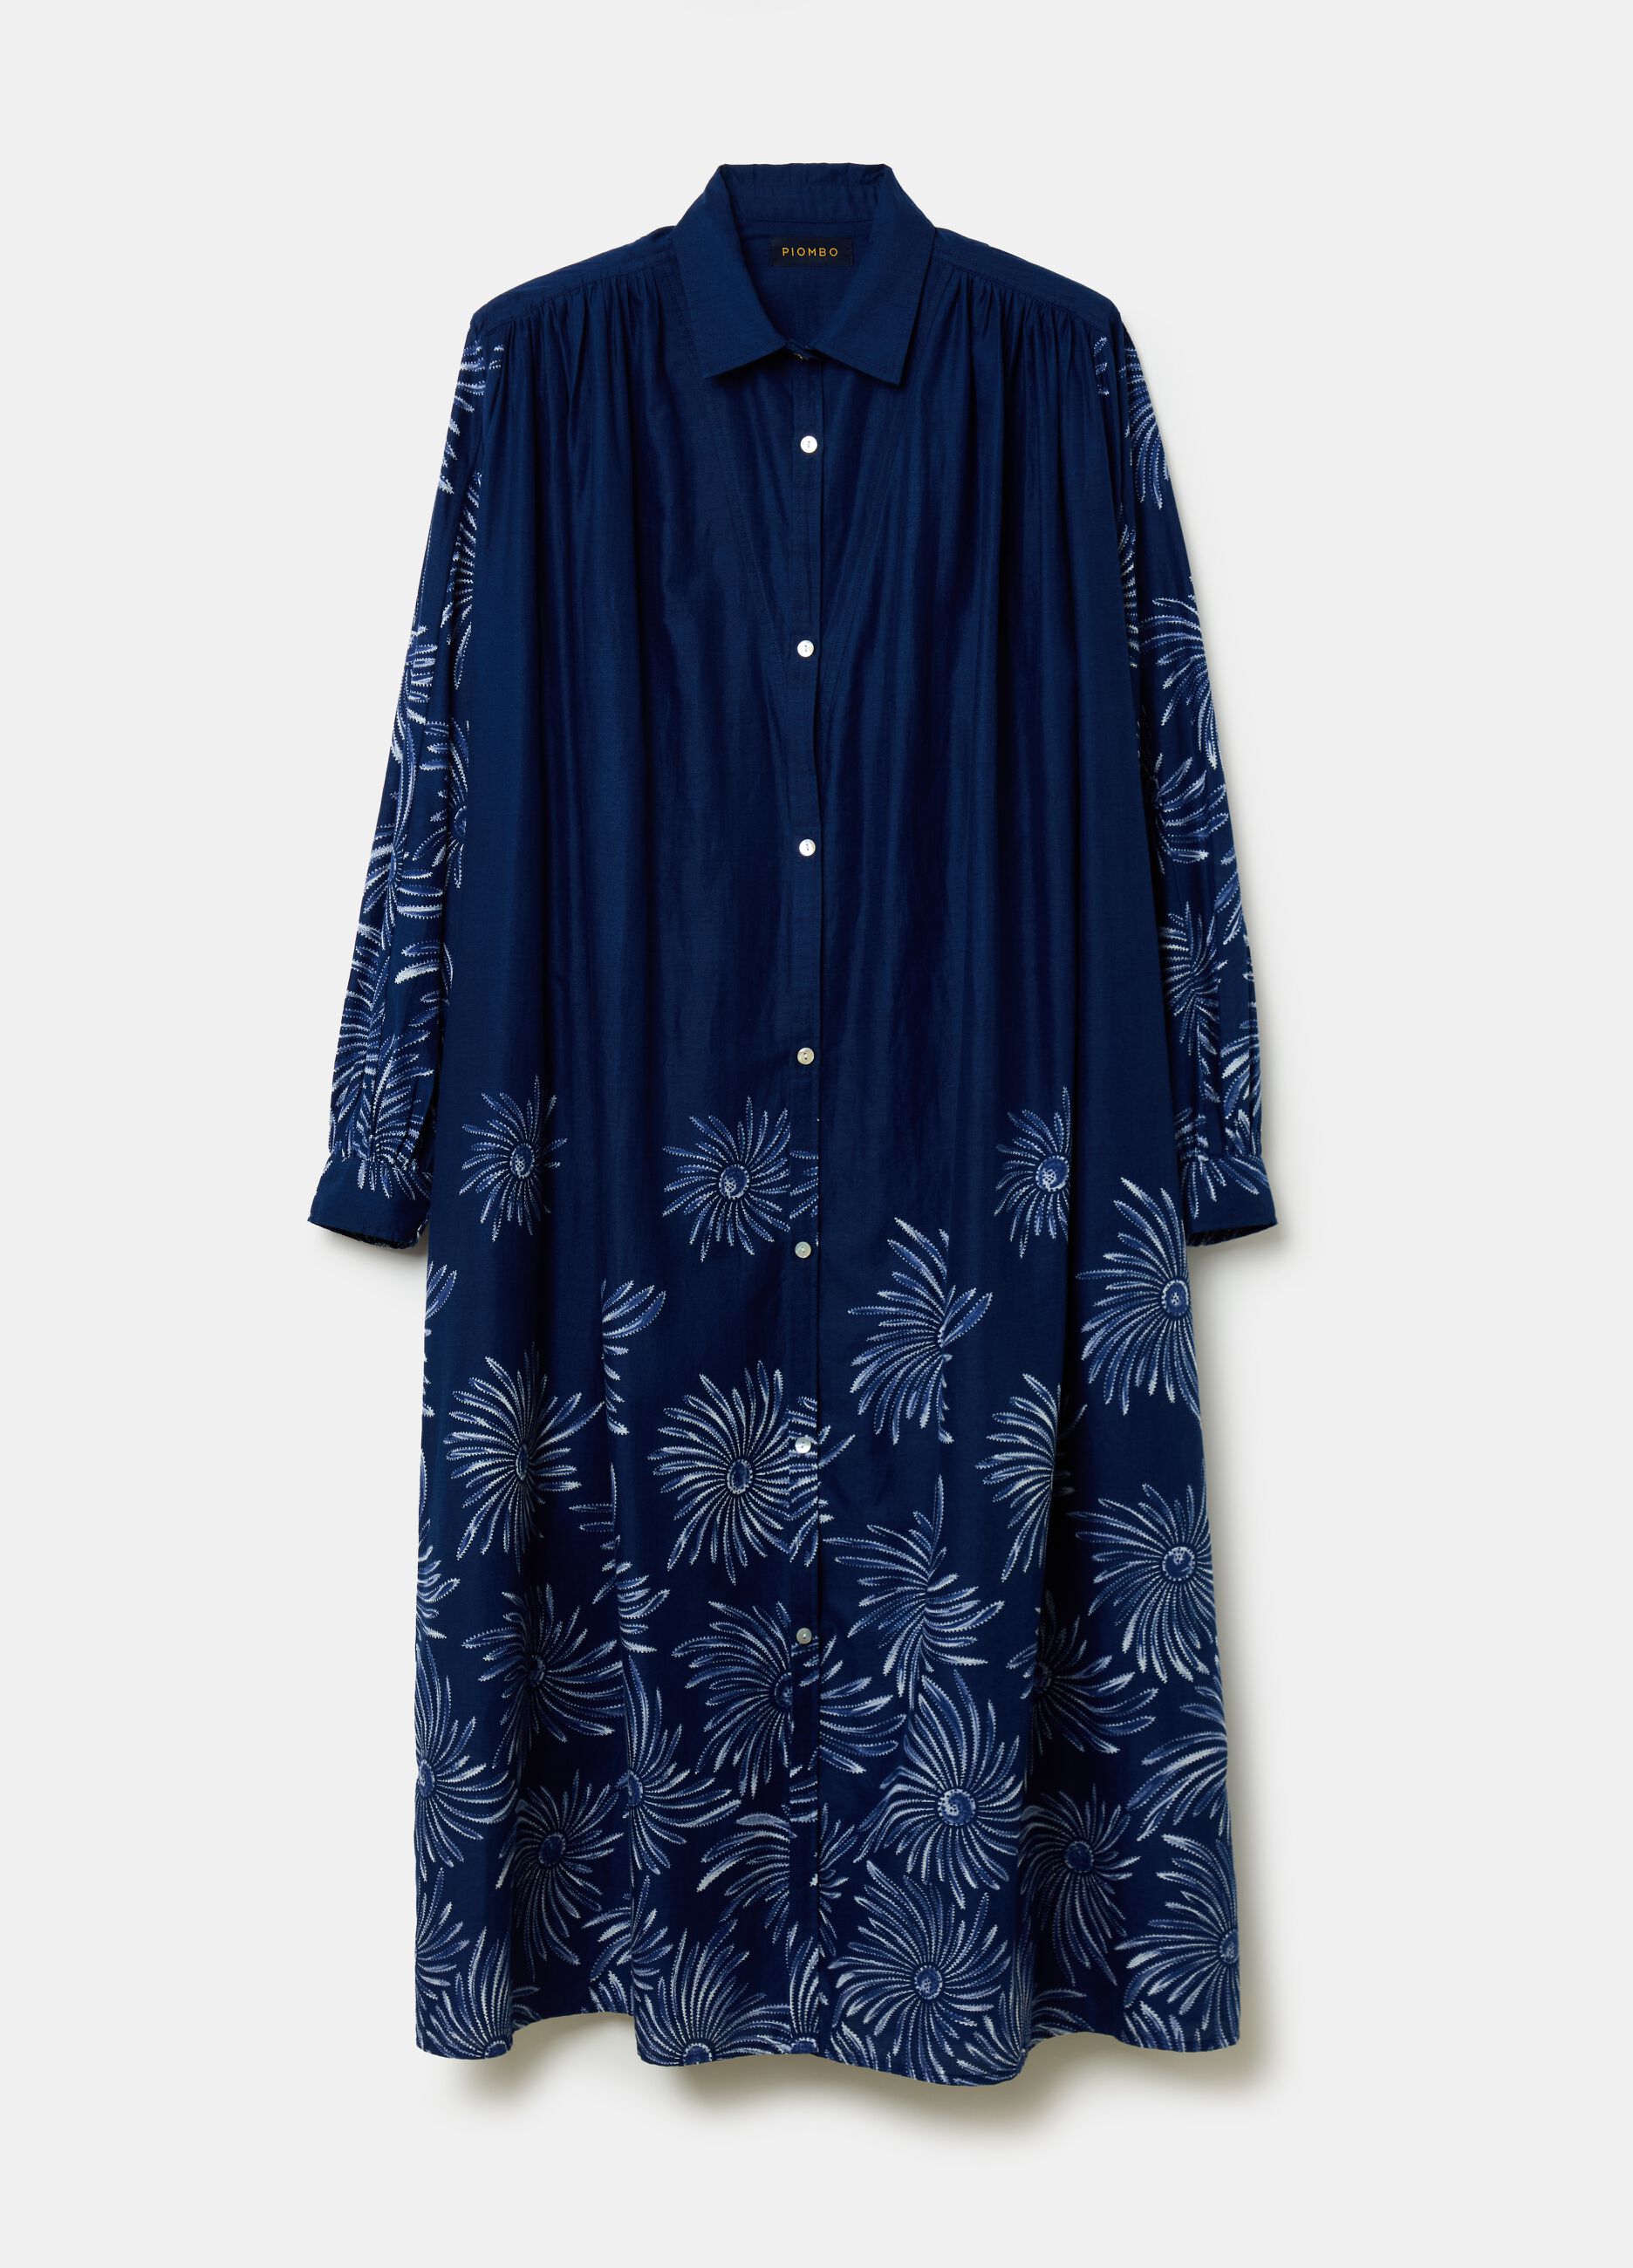 Long shirt dress with maxi flowers print